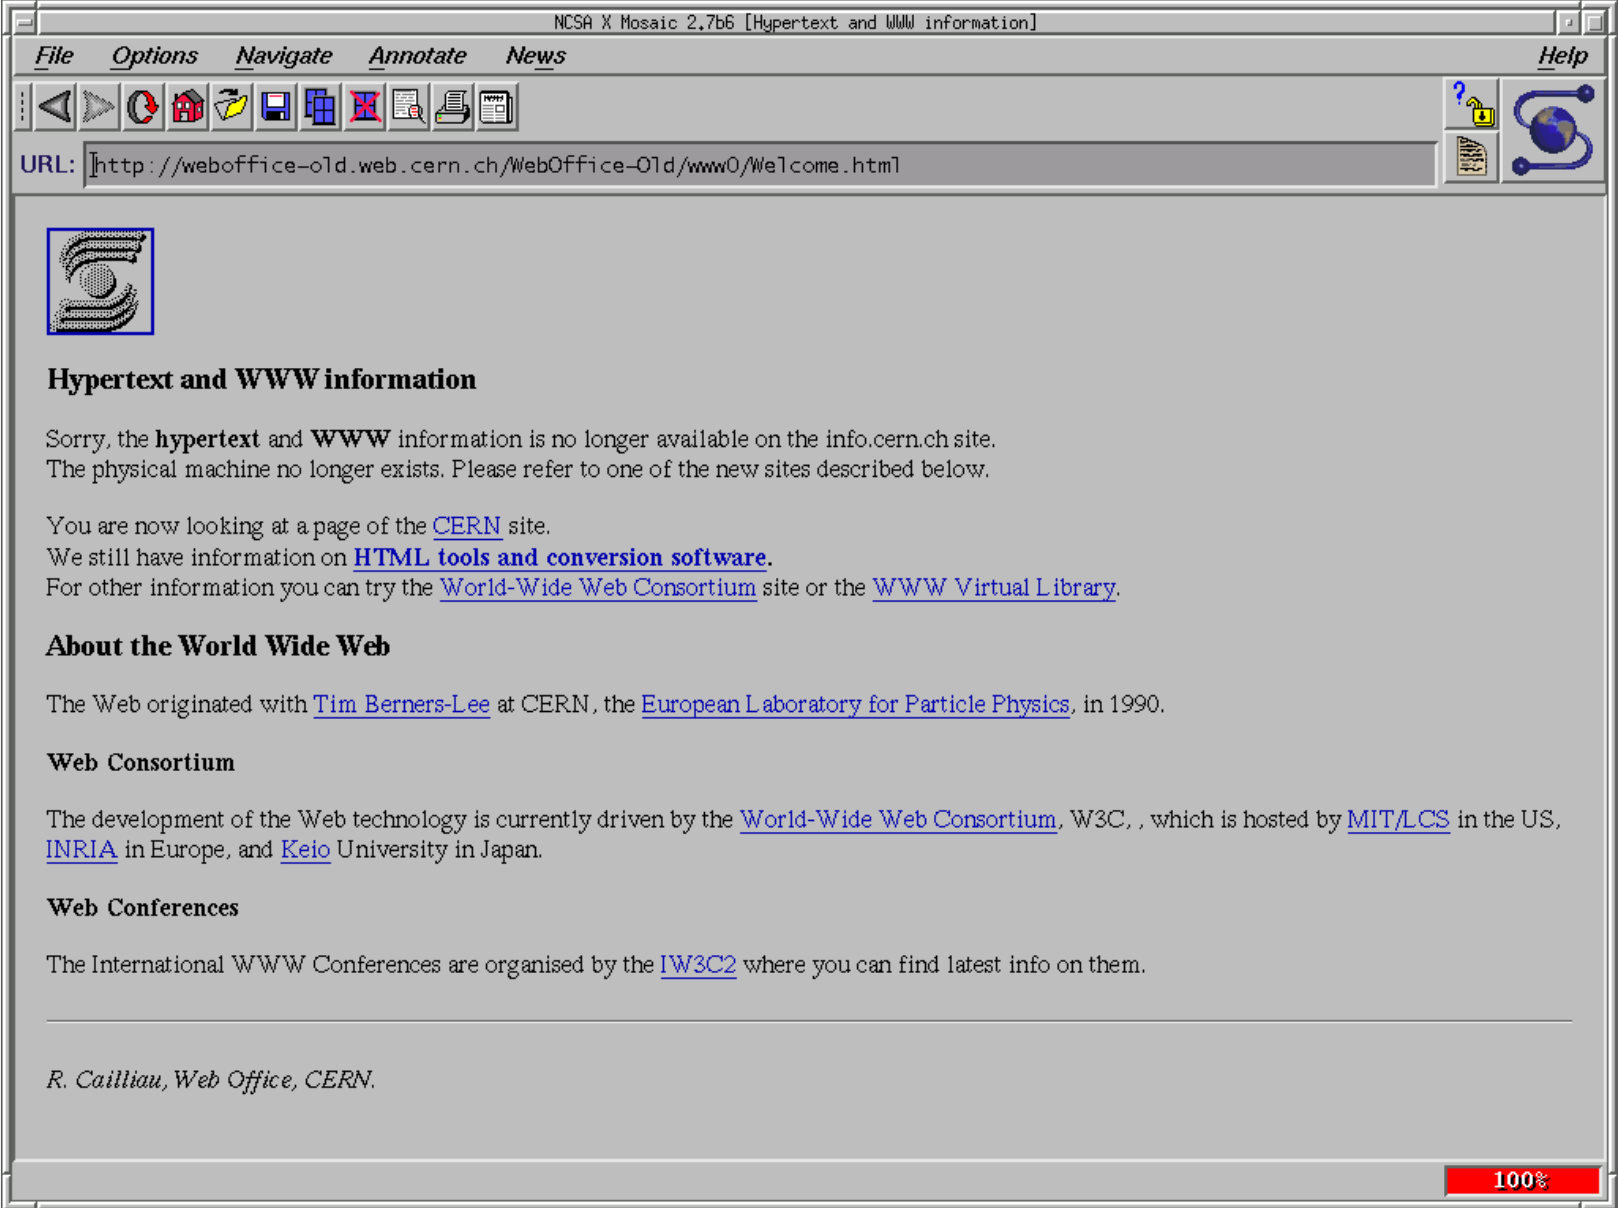 A webpage about hypertext